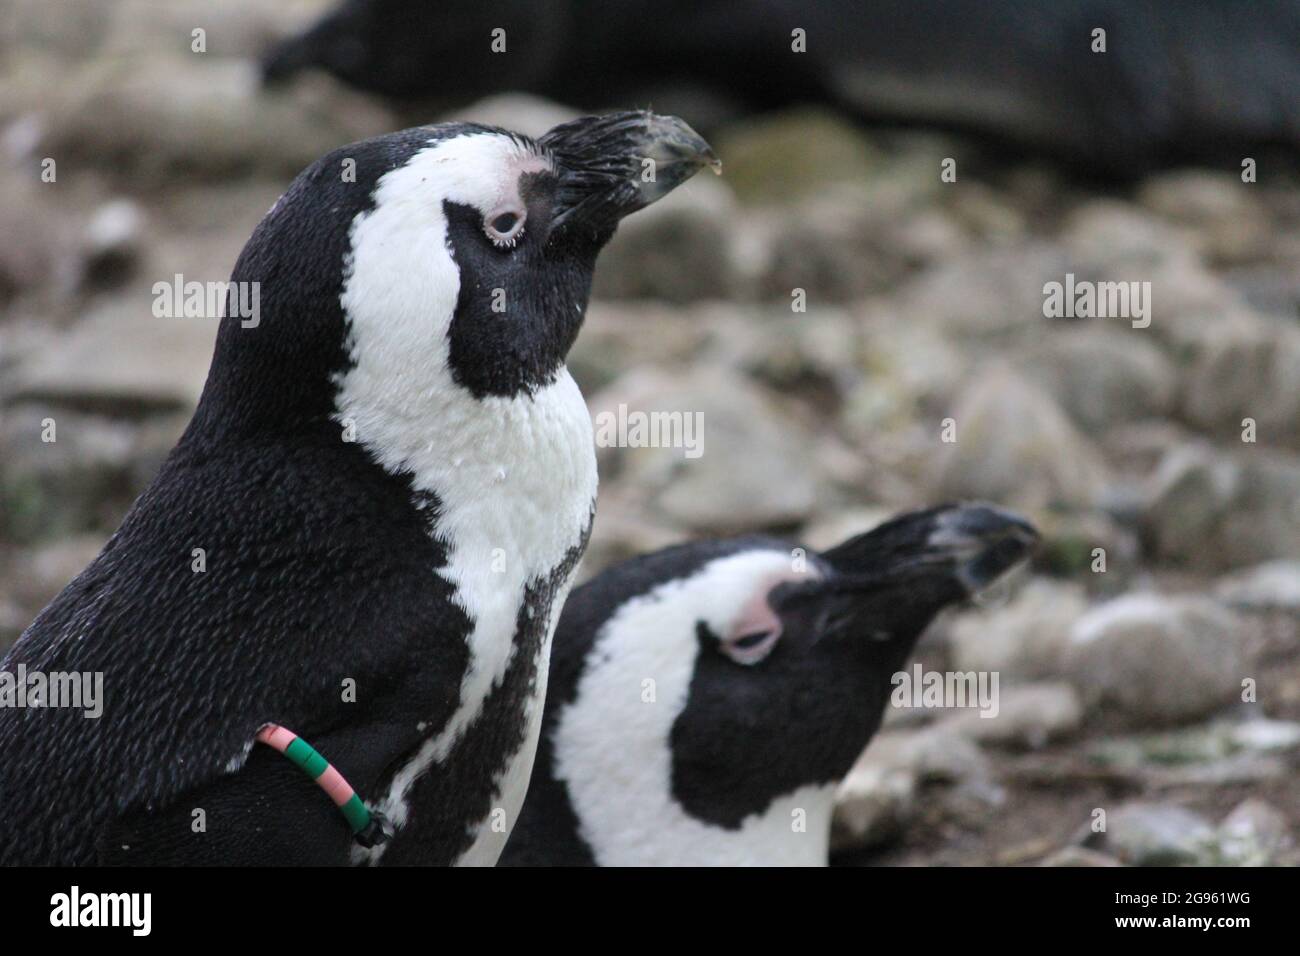 African penguin in Overloon zoo in the Netherlands Stock Photo